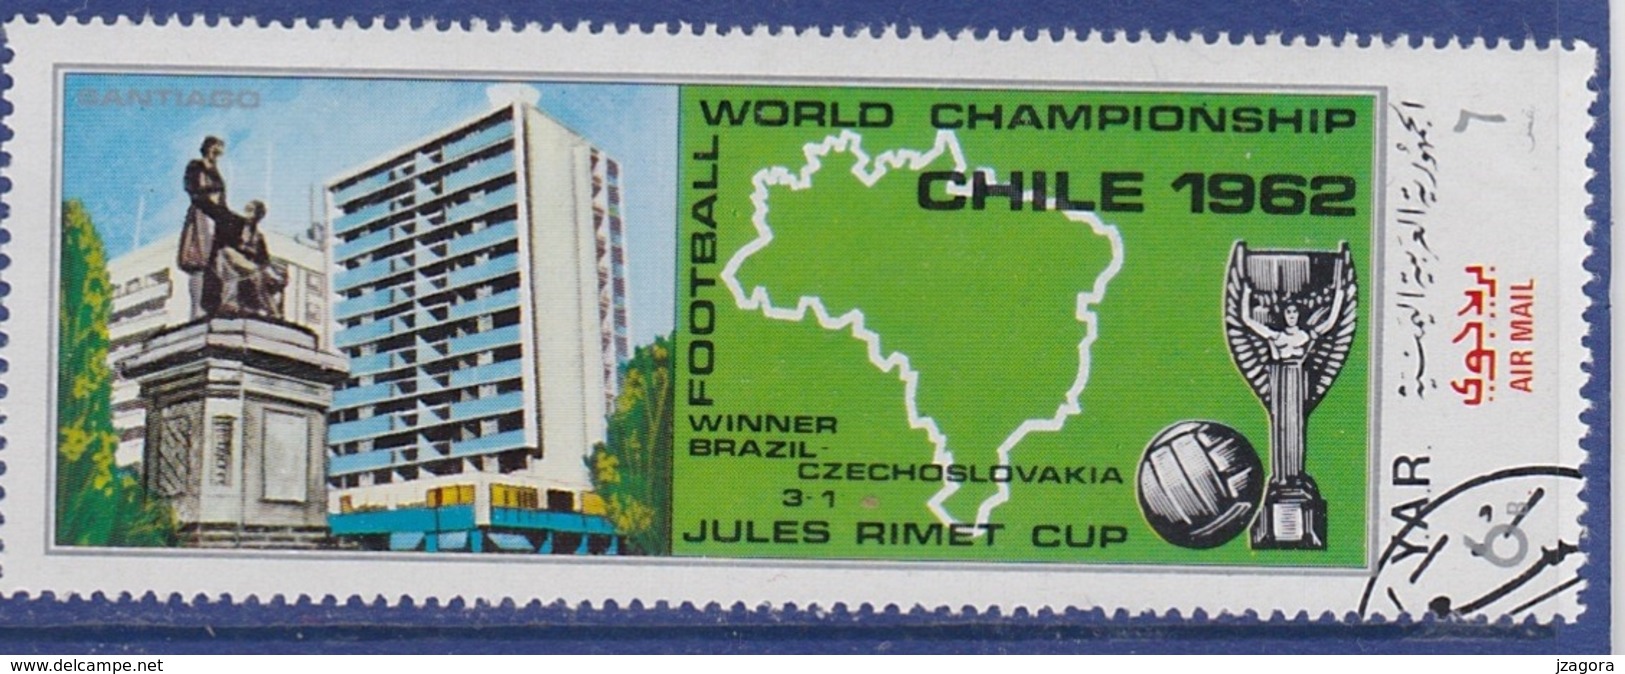 SOCCER FOOTBALL WORLD CHAMPIONSHIP MUNDIAL CHILE 1962 - YAR YEMEN - 1962 – Chile